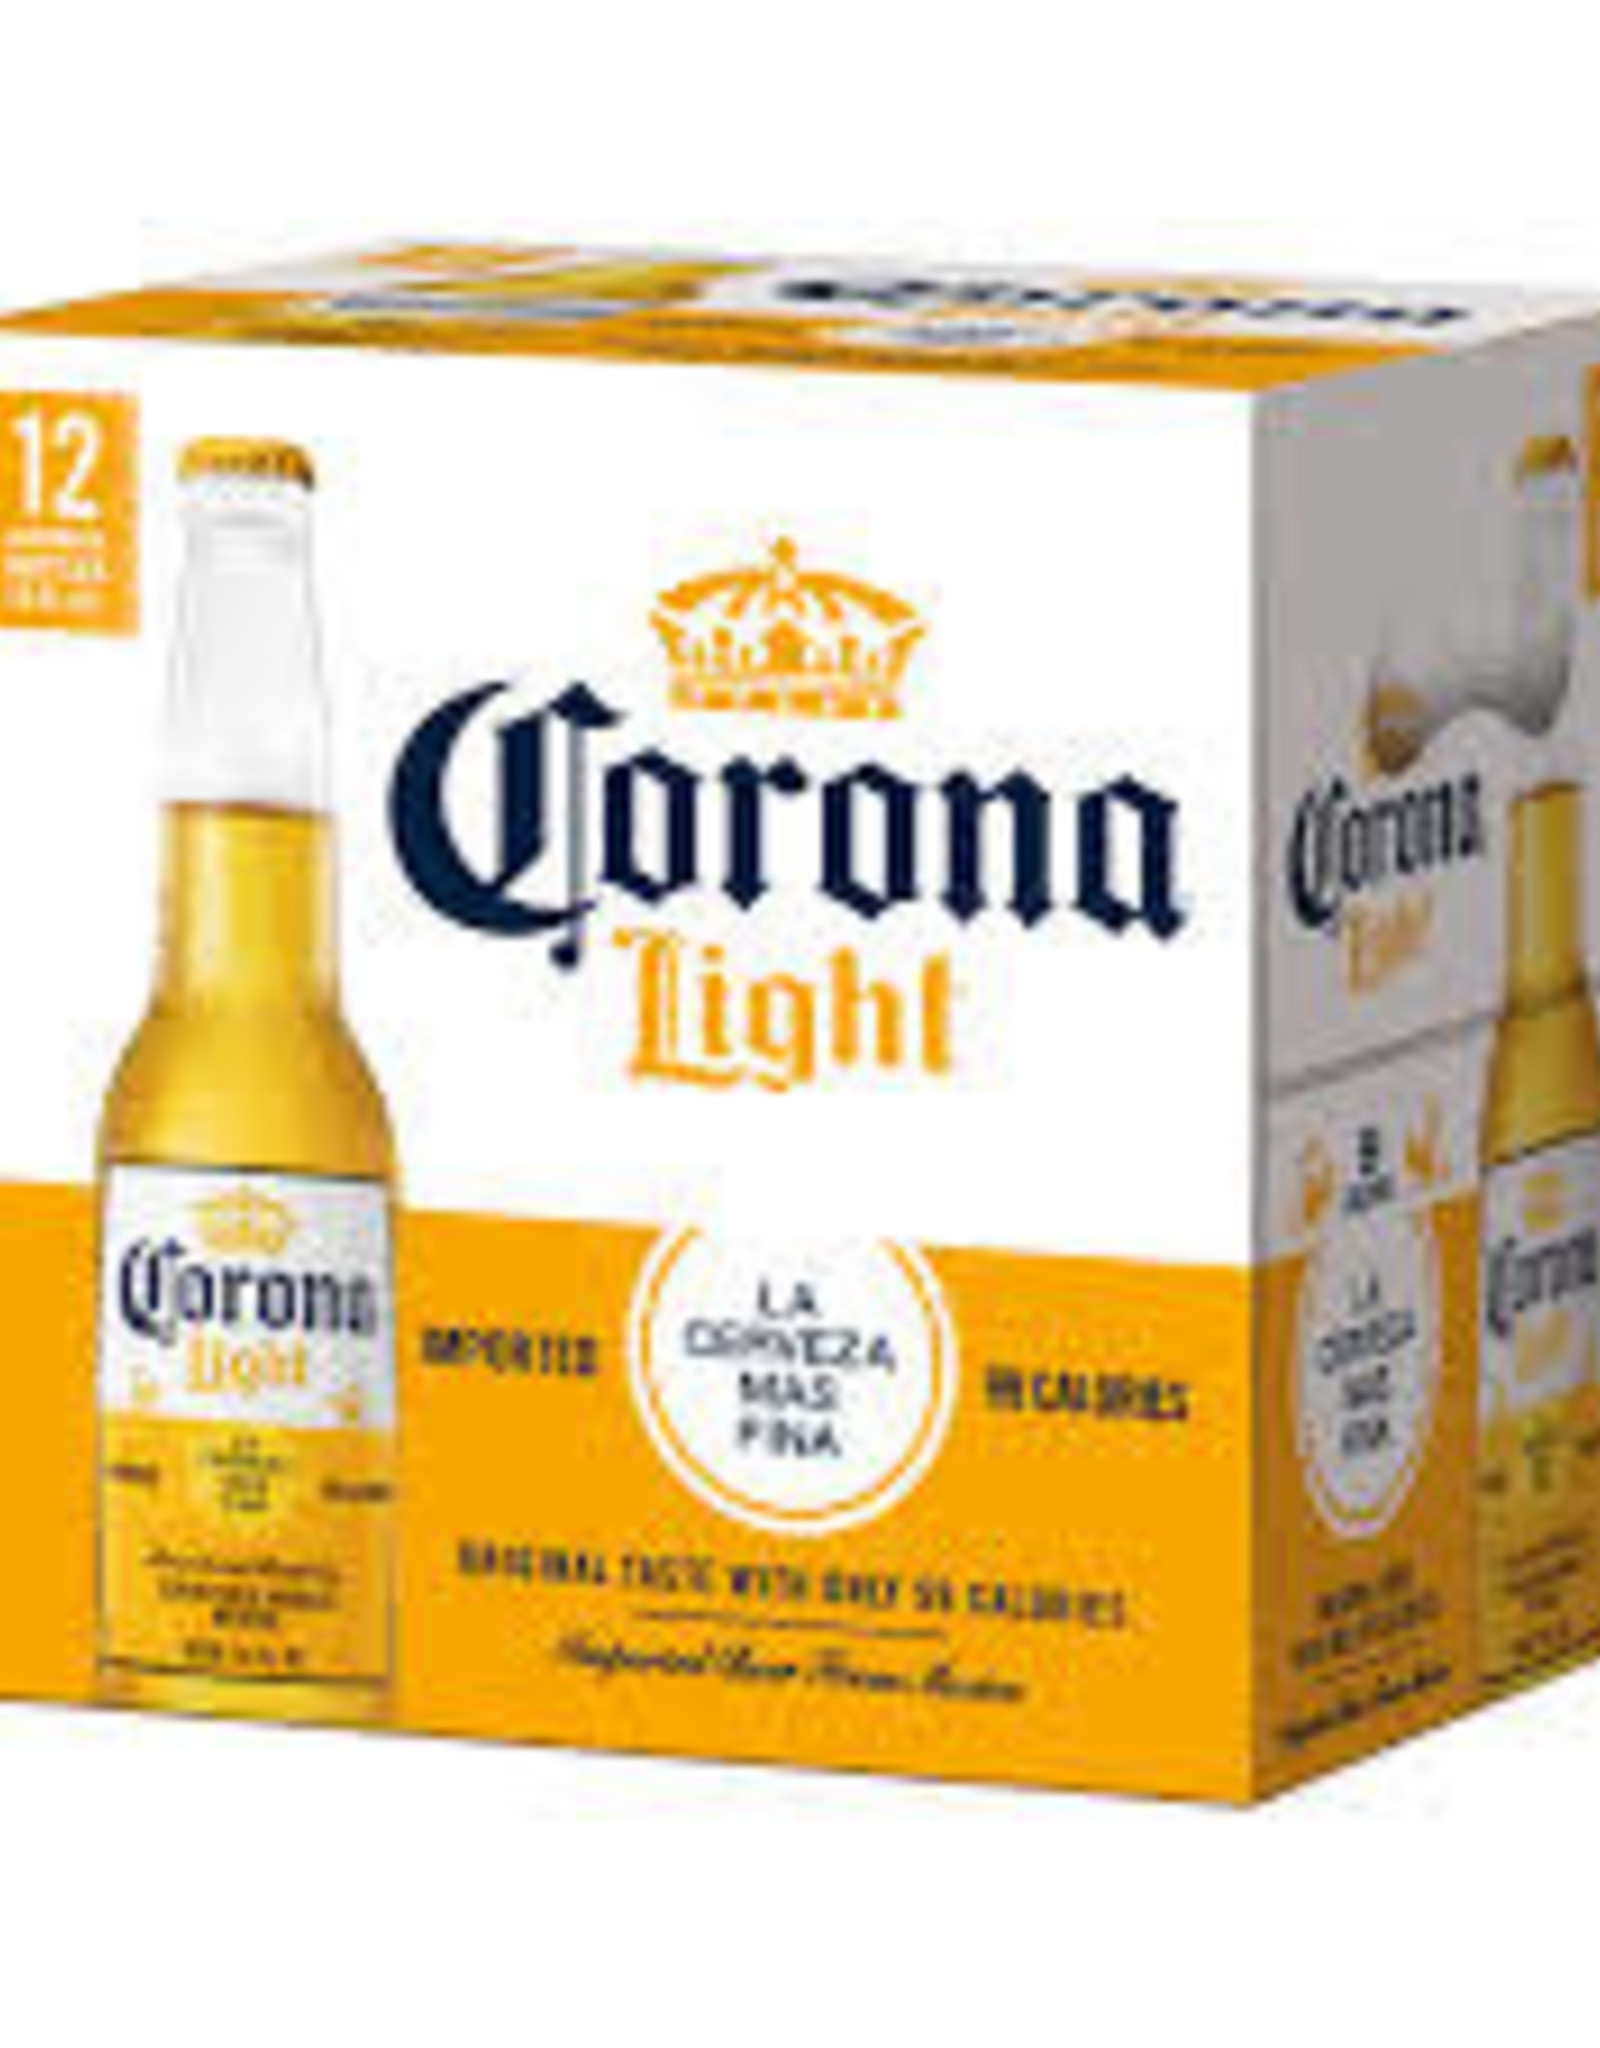 Corona Corona Light - 12pk - 12oz - Bottles